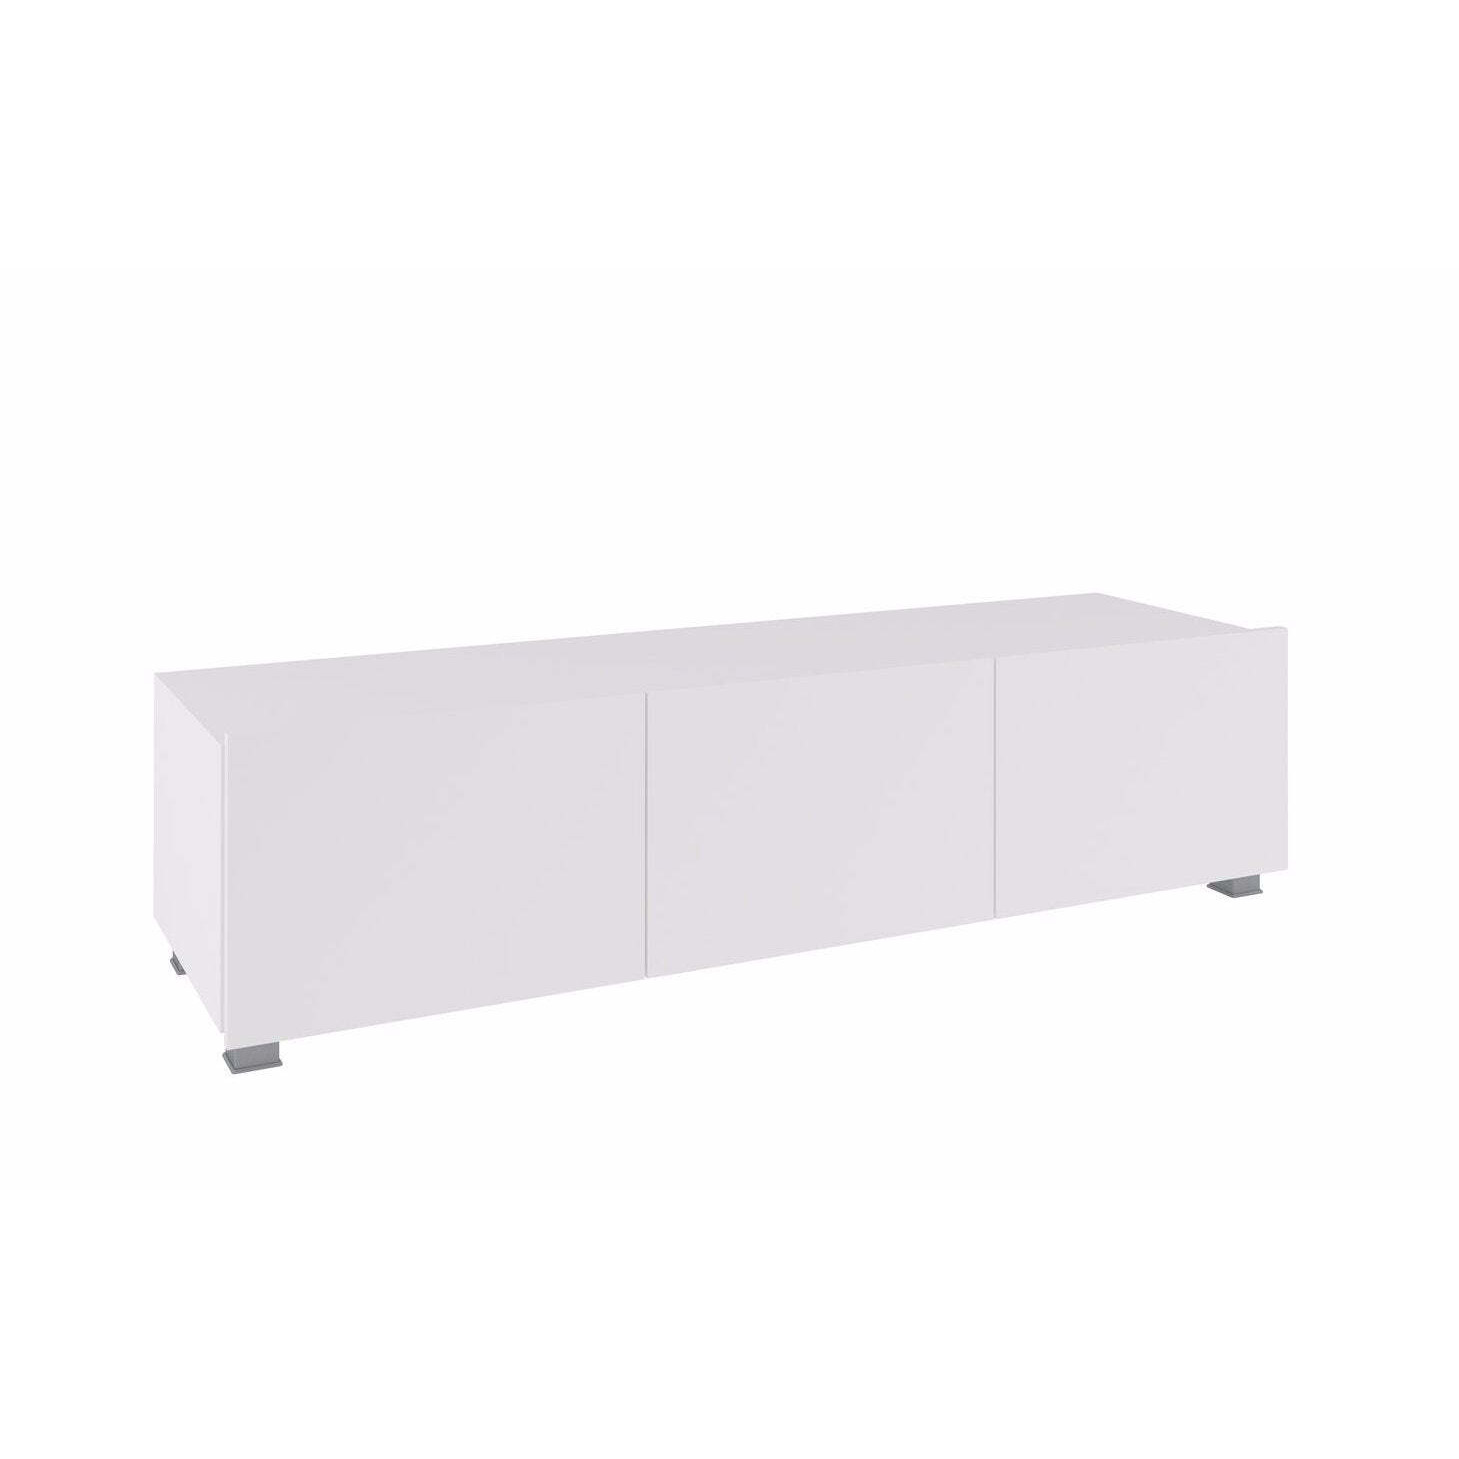 Calabrini TV Cabinet 150cm - White Gloss 150cm - image 1